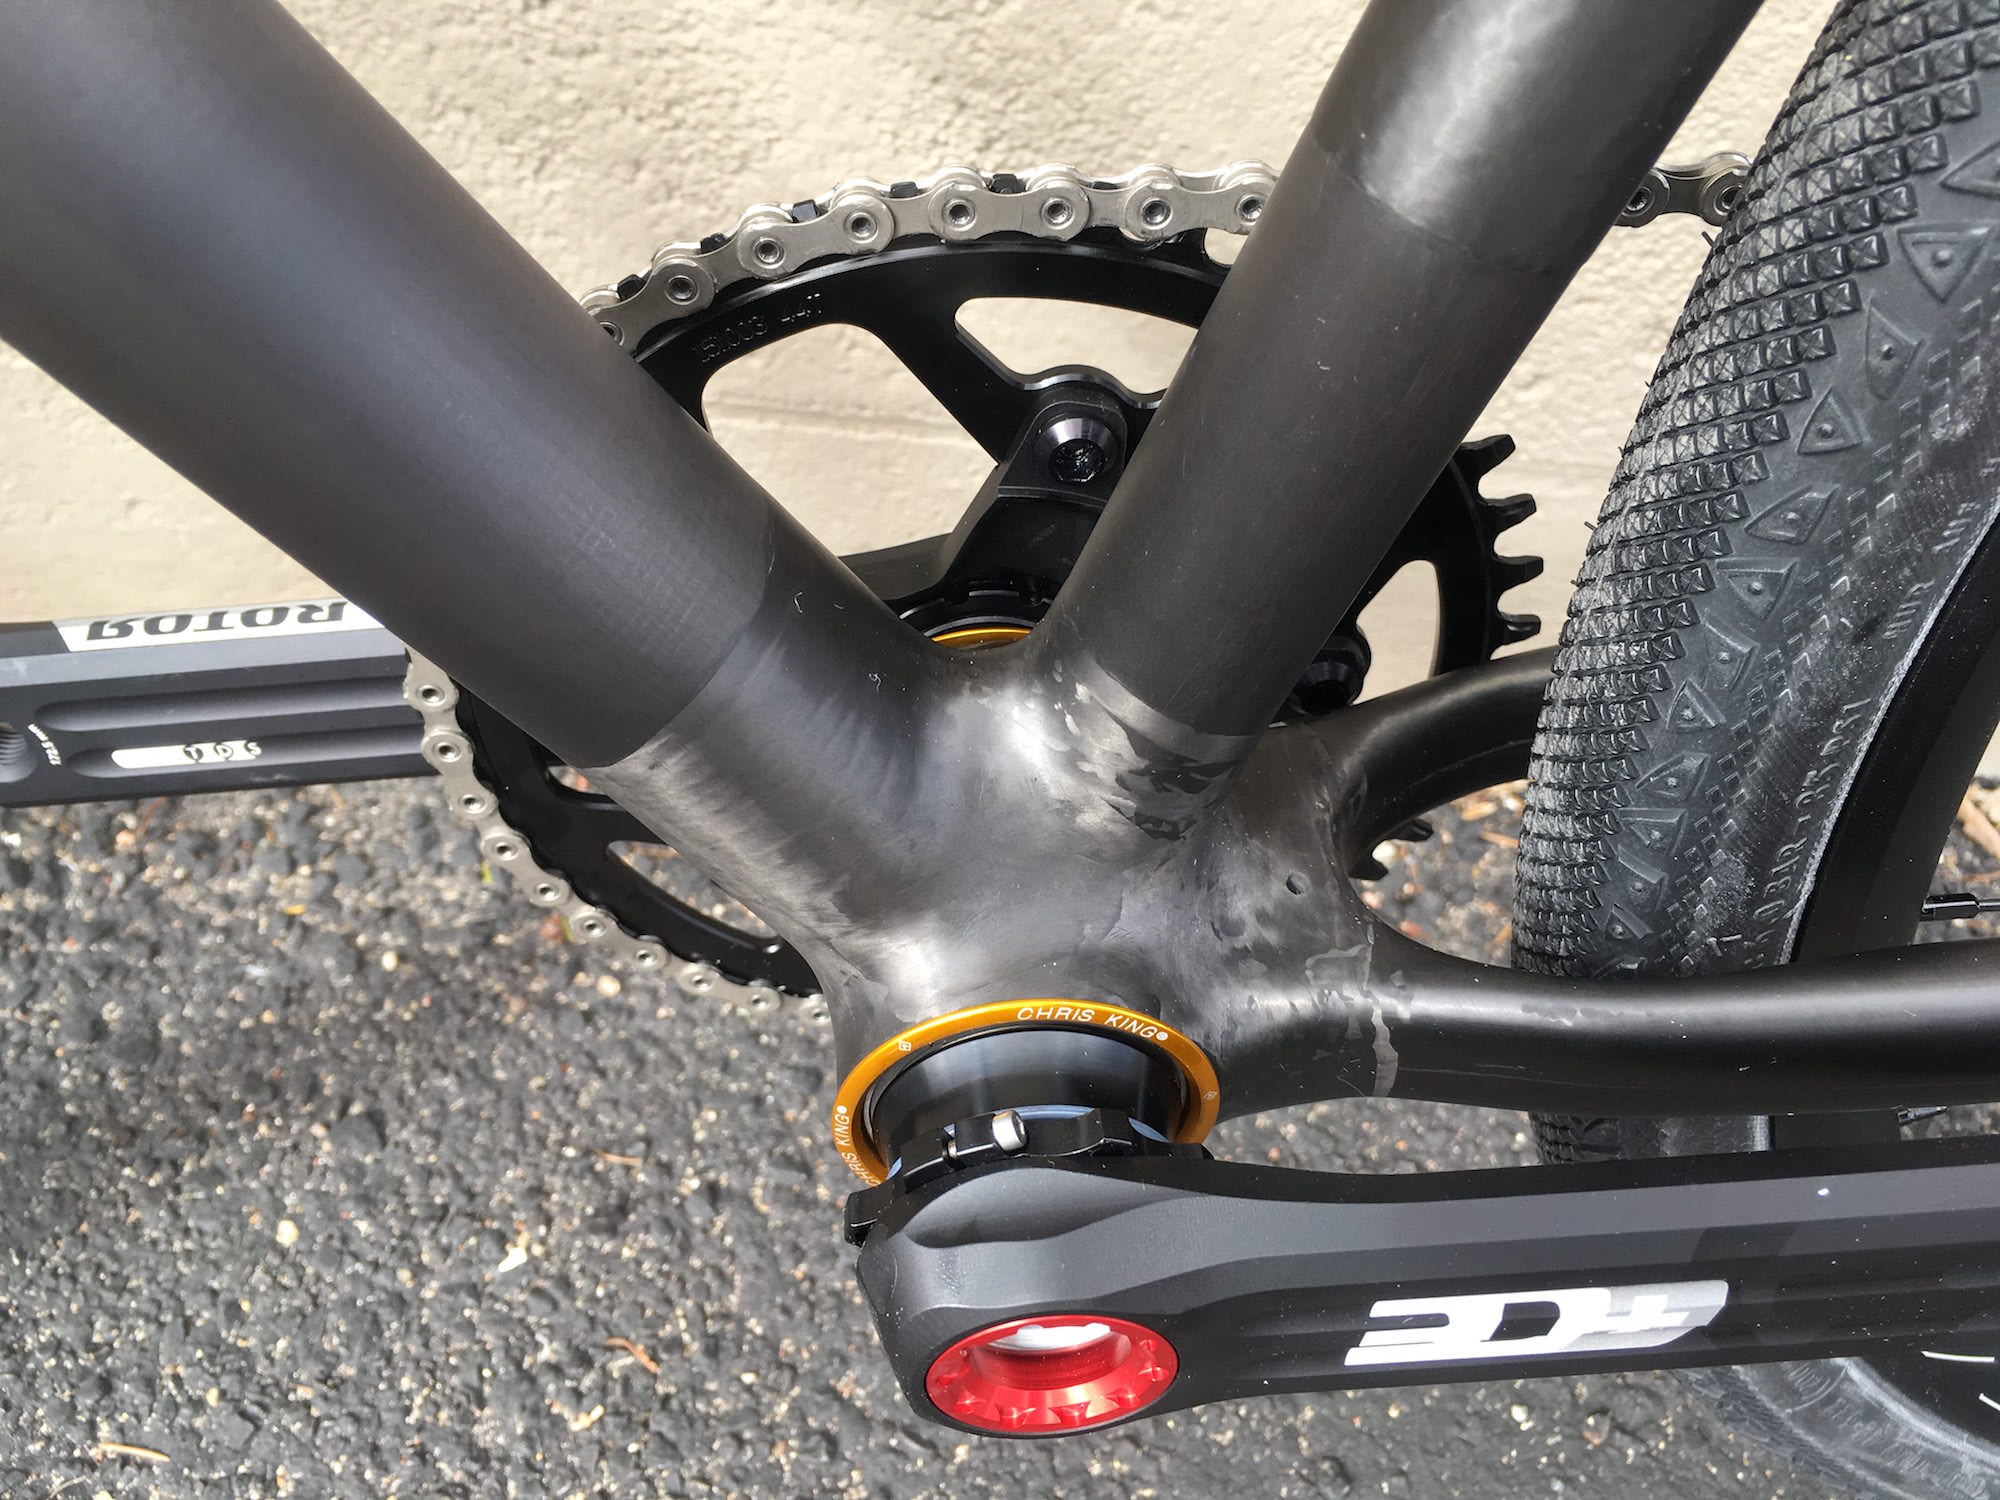 diy carbon fiber bike